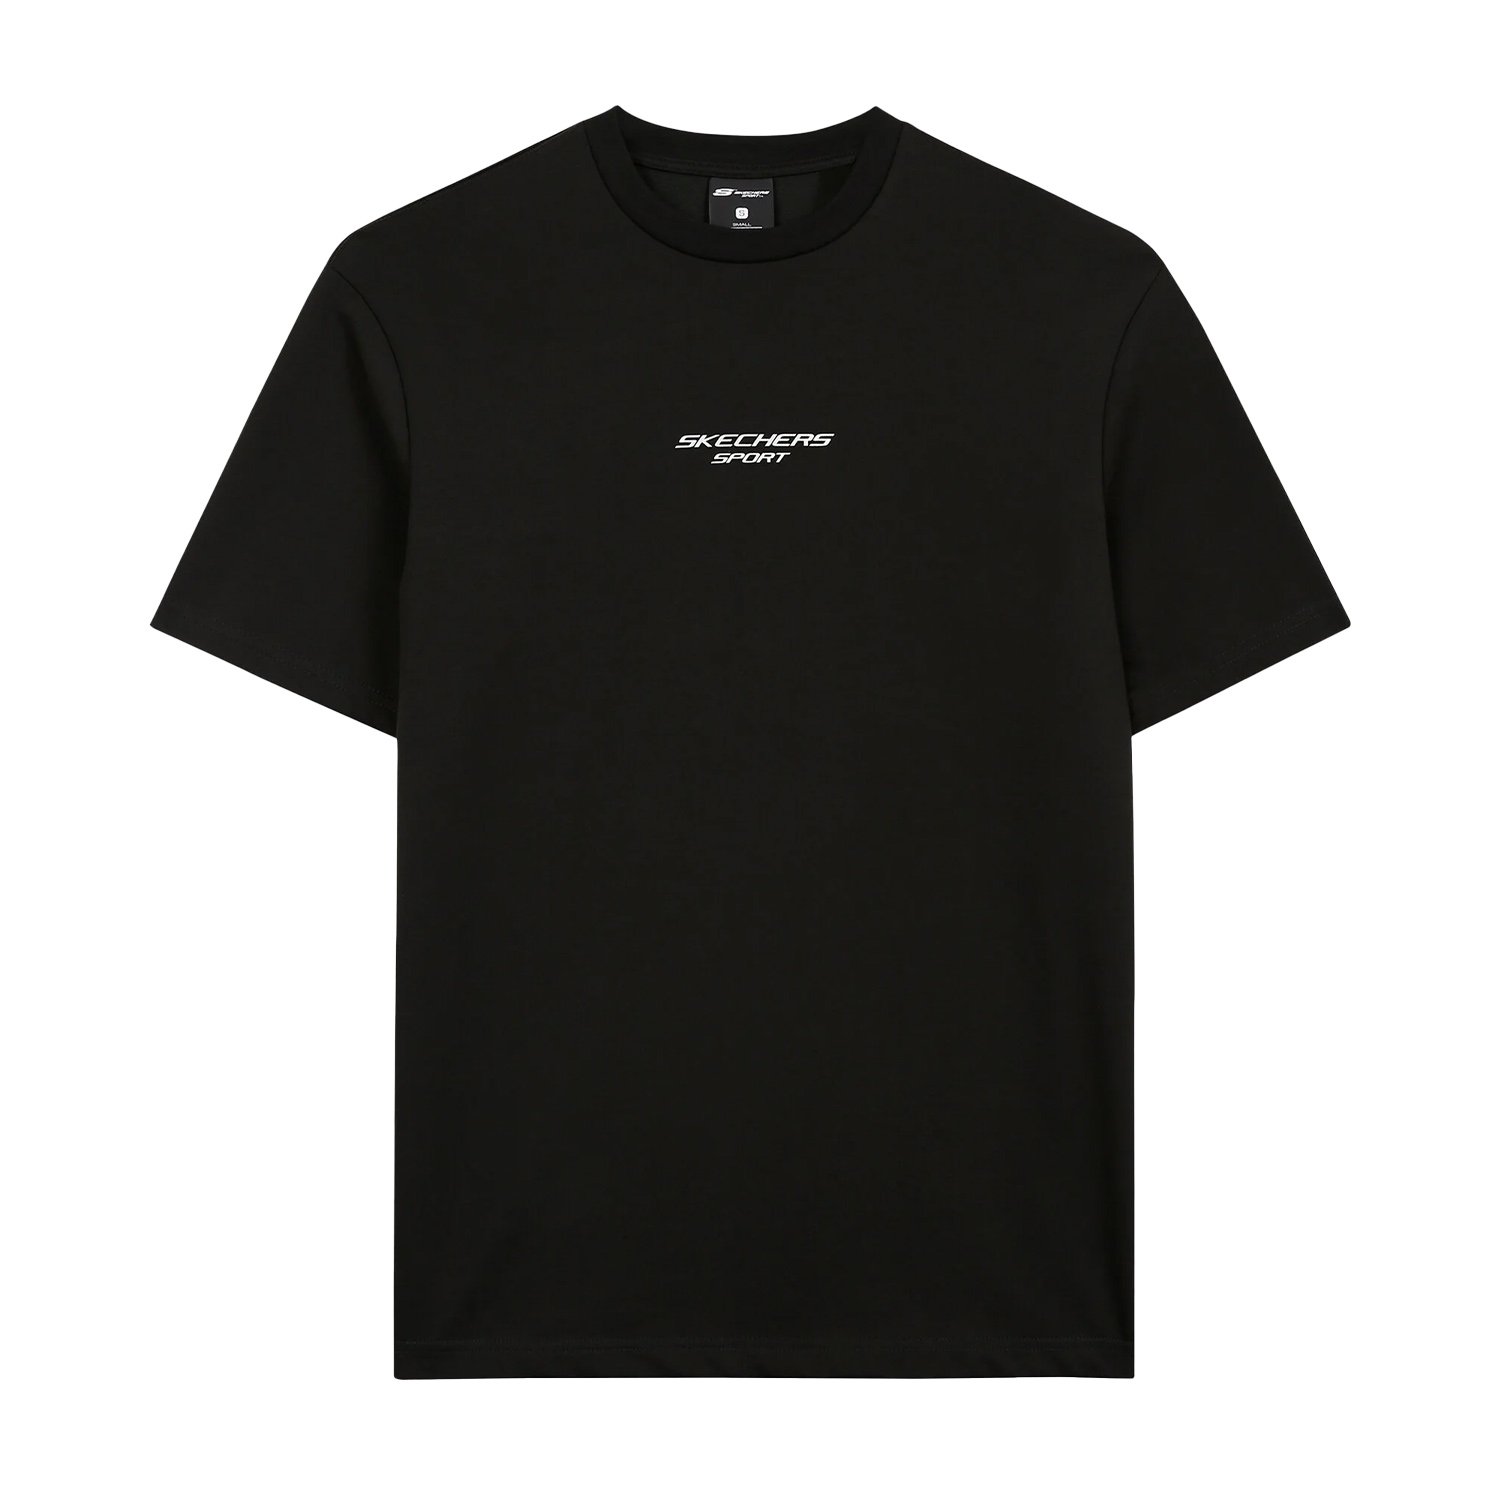 Graphic Tee's T-Shirt - Siyah - 1